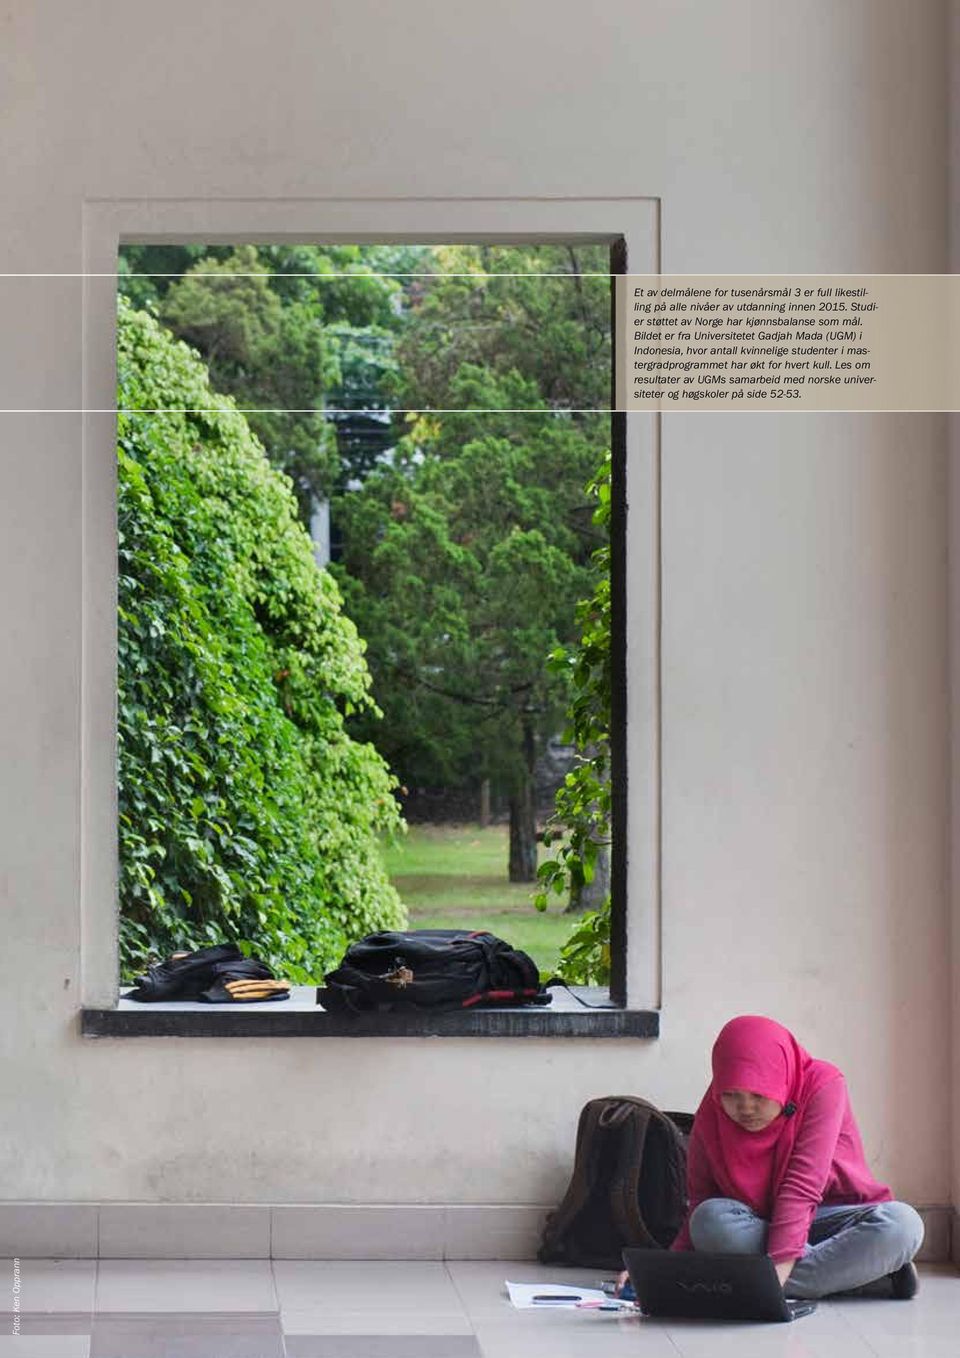 Bildet er fra Universitetet Gadjah Mada (UGM) i Indonesia, hvor antall kvinnelige studenter i